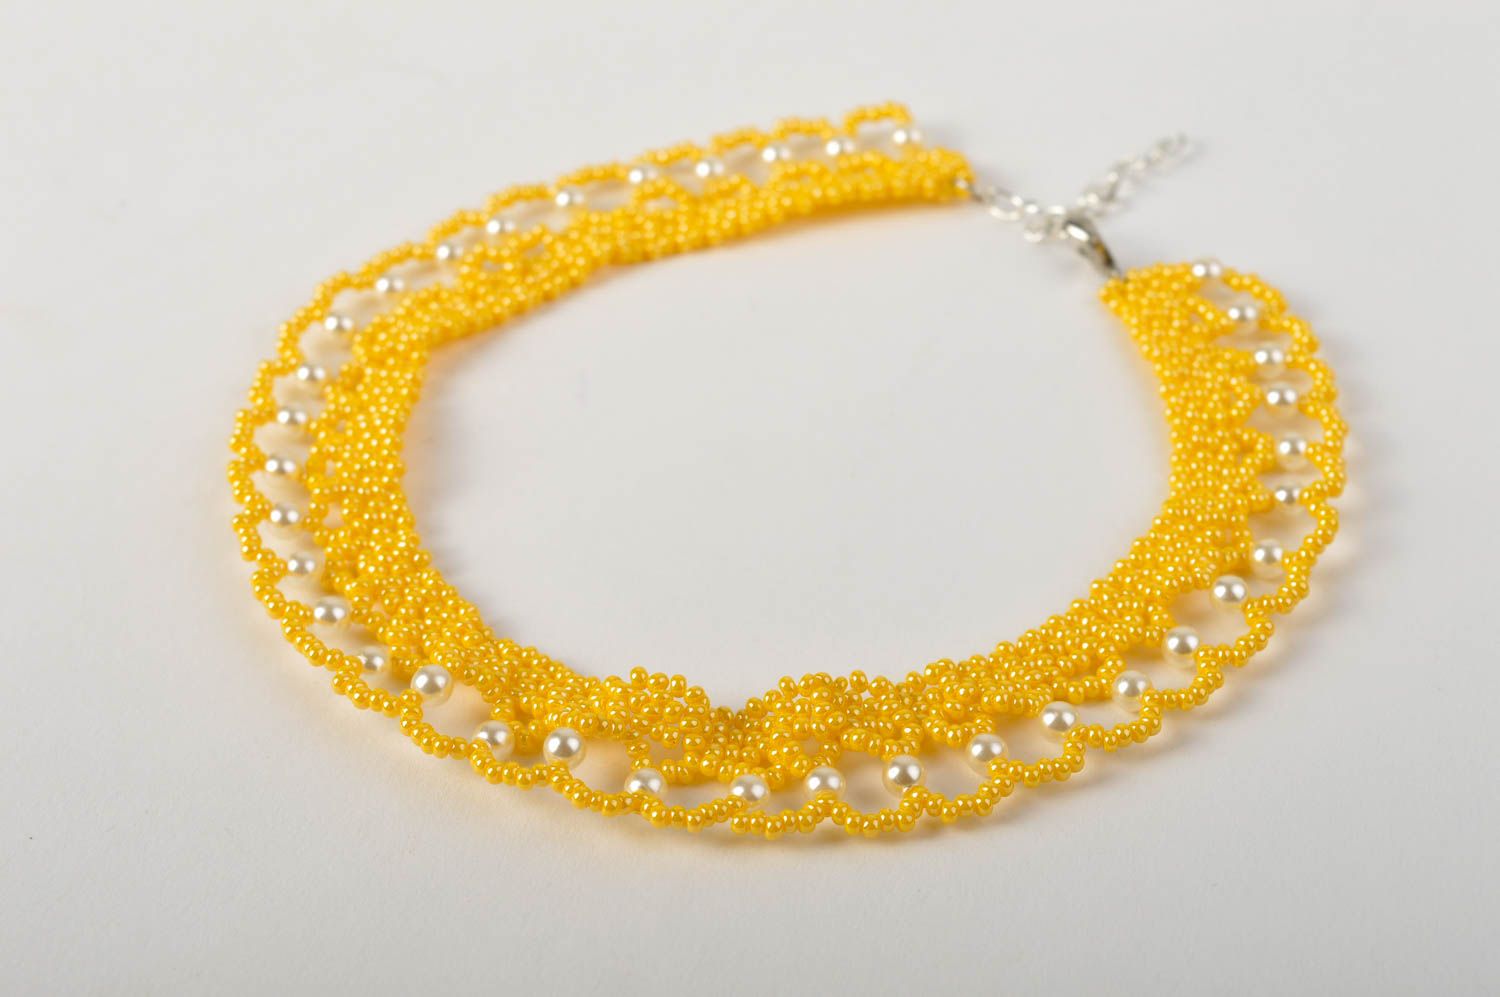 Beautiful handmade beaded necklace woven bead necklace artisan jewelry designs photo 4